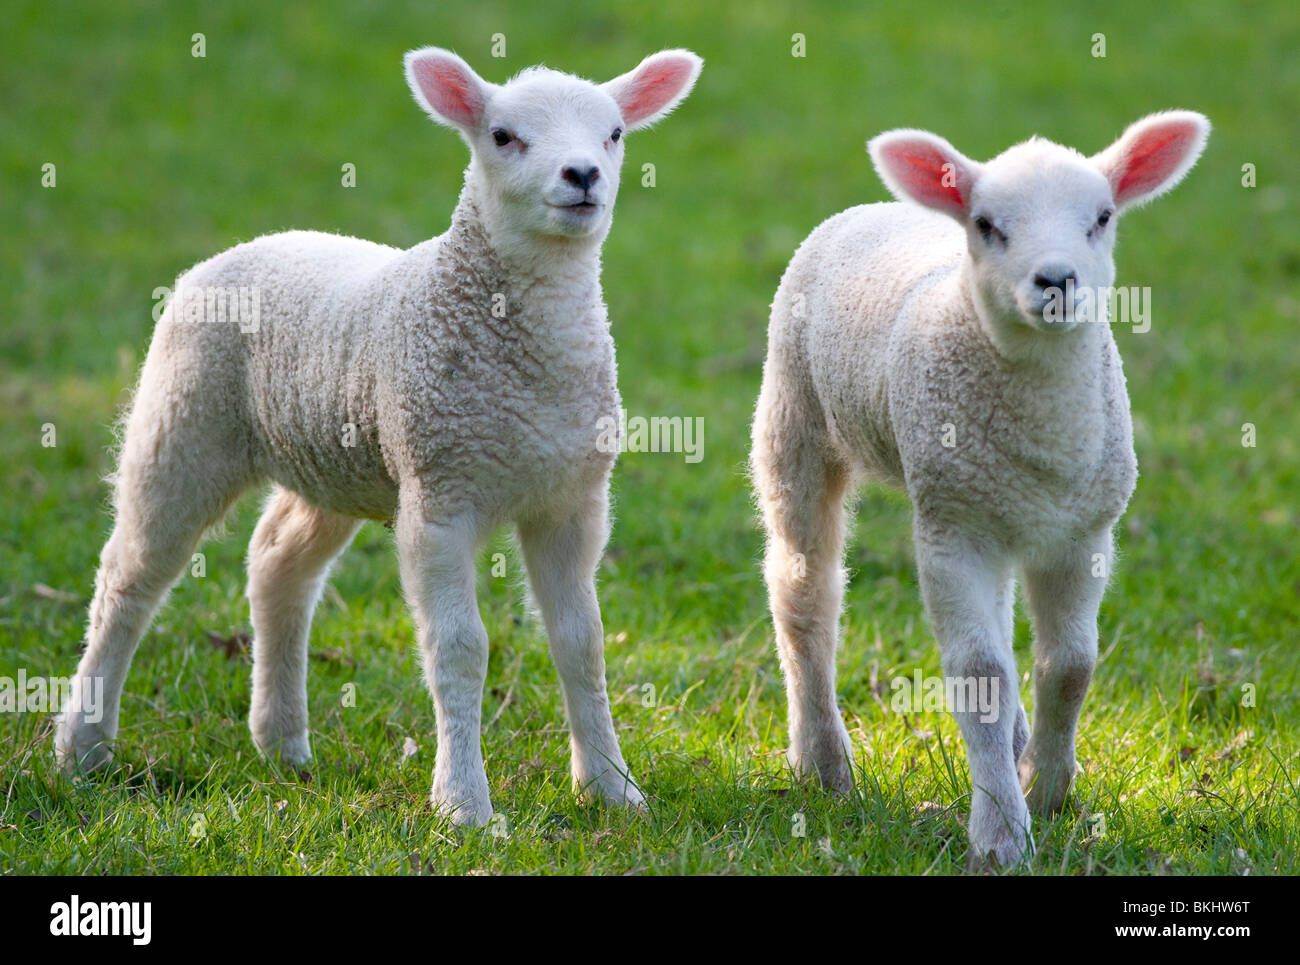 lambs in a field looking towards the camera . Full colour horizontal photo Stock Photo